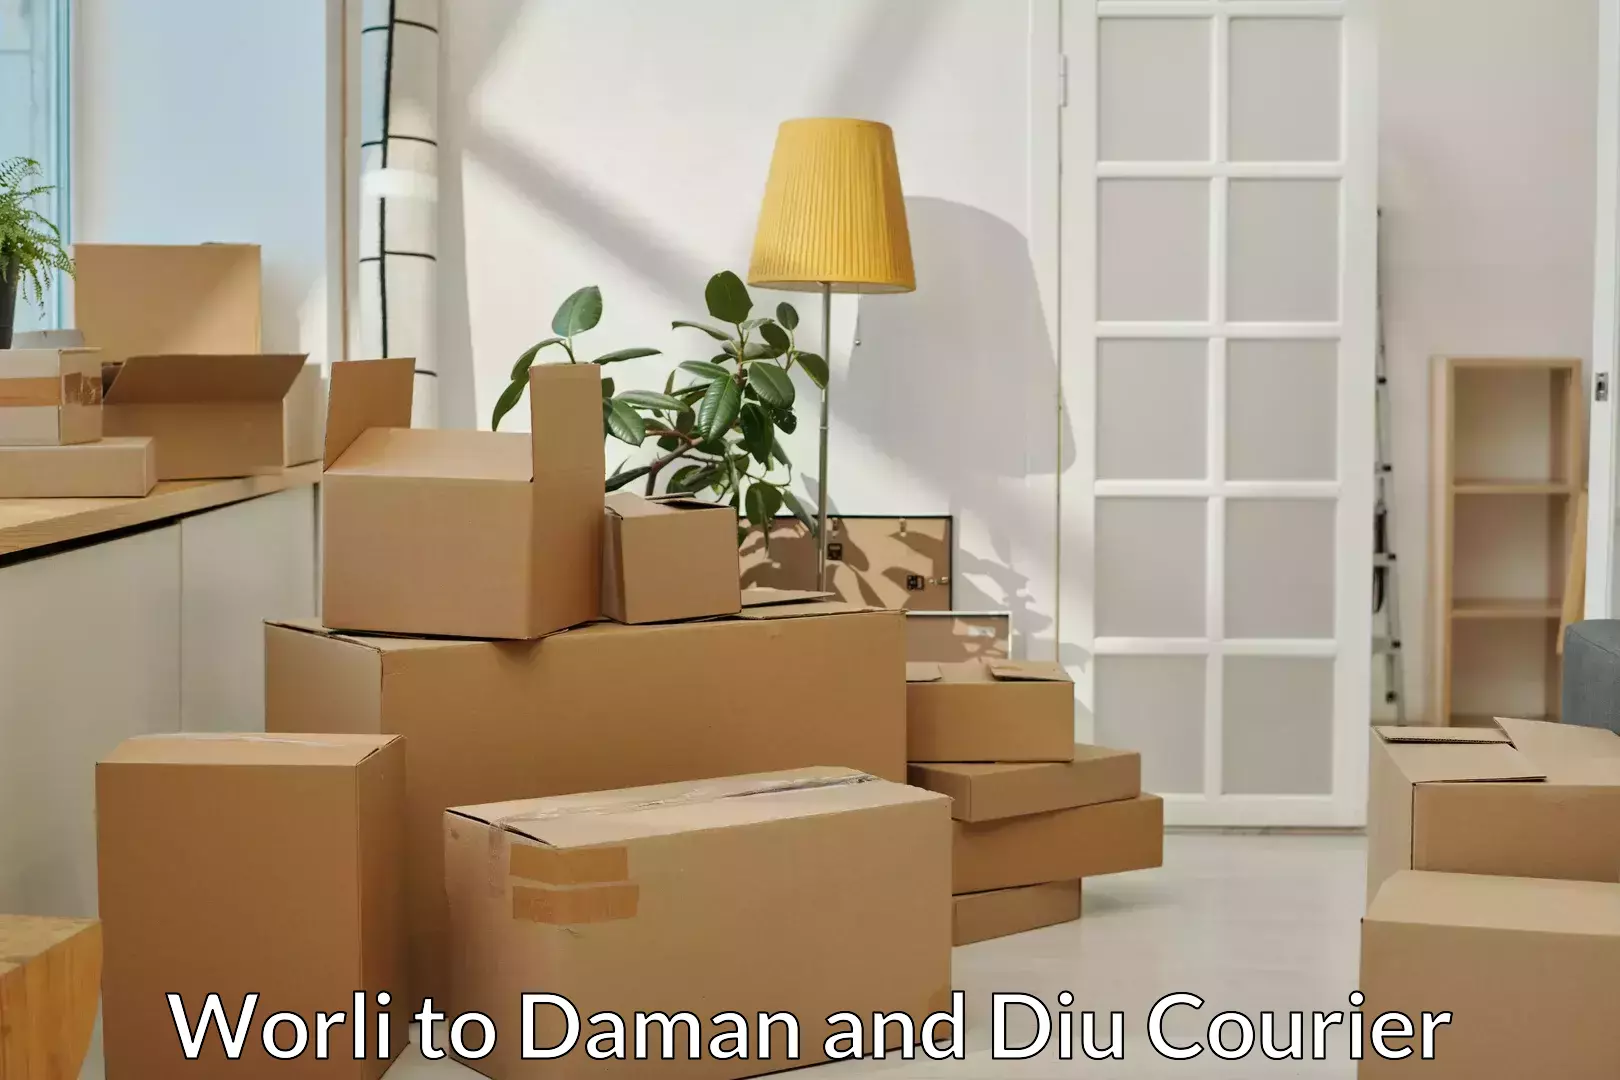 Professional moving company Worli to Daman